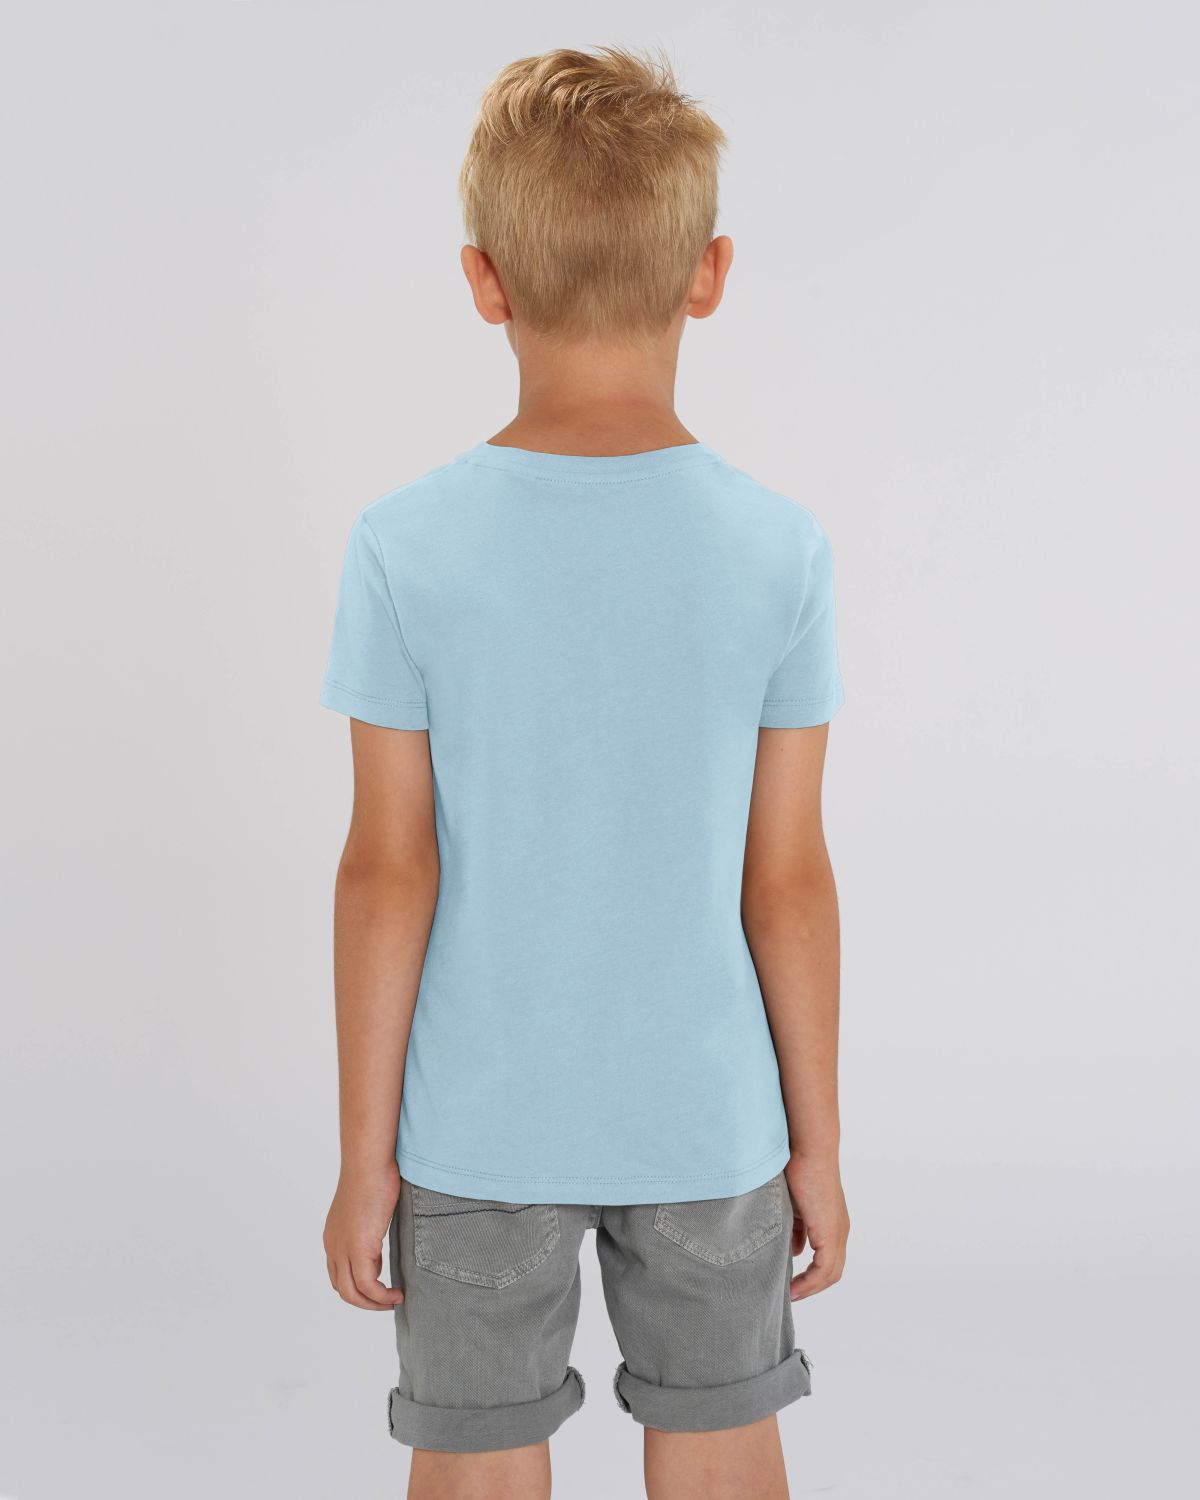 Stanley/Stella's - Mini Creator T-shirt - Sky Blue